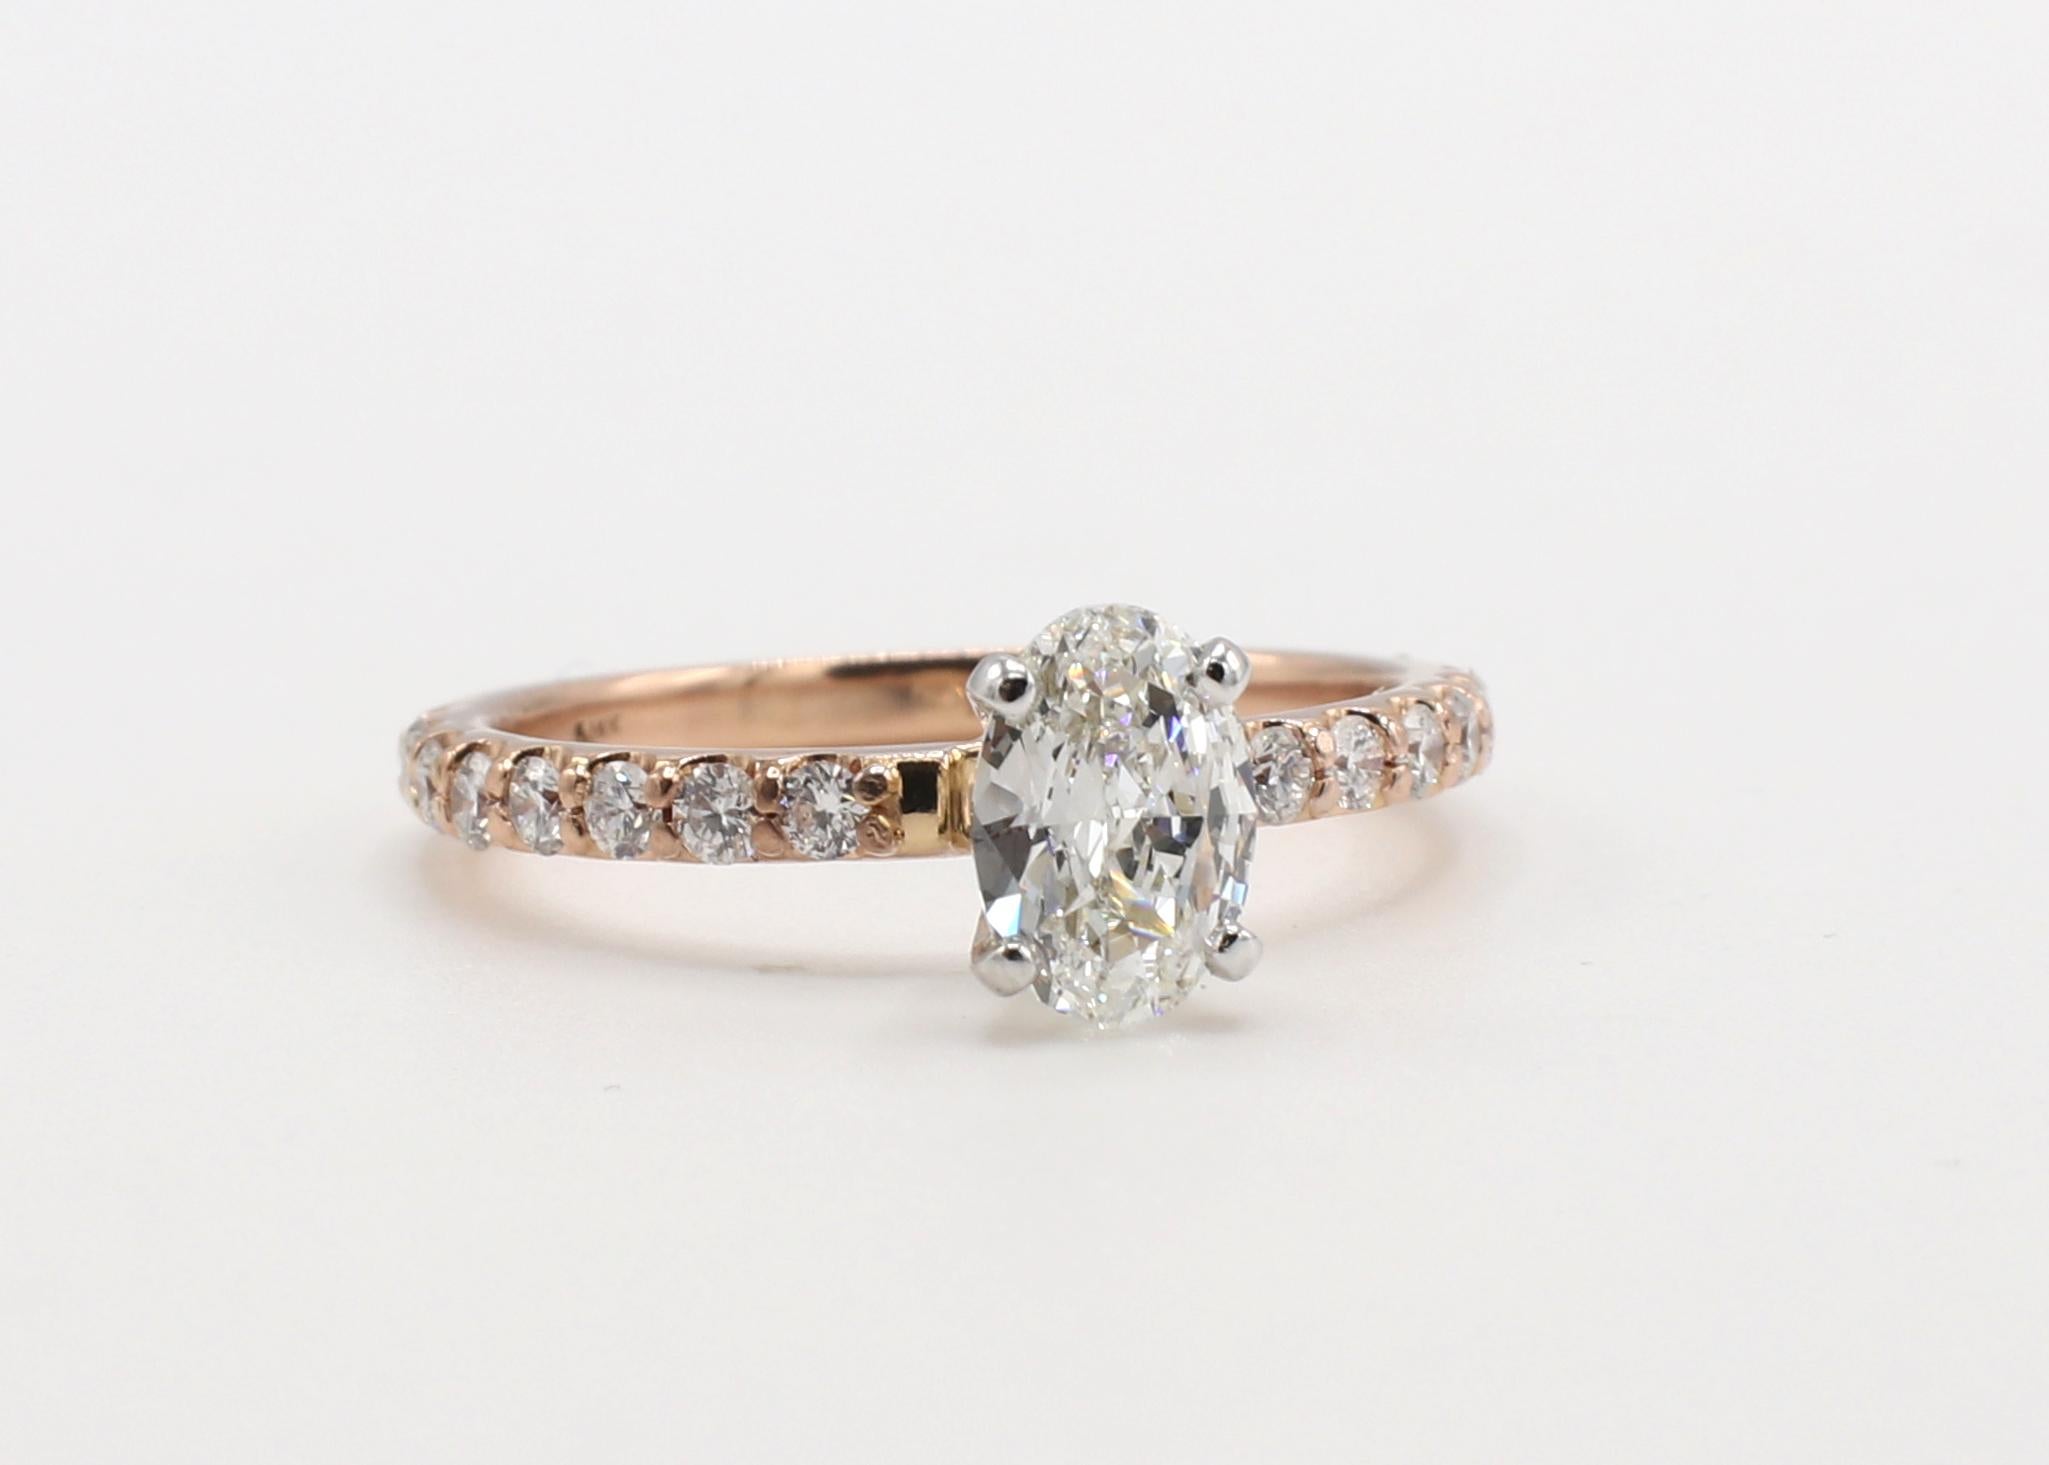 14 Karat Rose Gold .55 Carat Oval Natural Diamond Engagement Ring 
Metal: 14k rose gold
Weight: 1.86 grams
Diamond: Approx. .55 carat oval H VS natural diamond
Accent diamonds: Approx. .32 CTW G VS natural diamonds
Size: 5.5 (US)
Height: 6mm
Band: